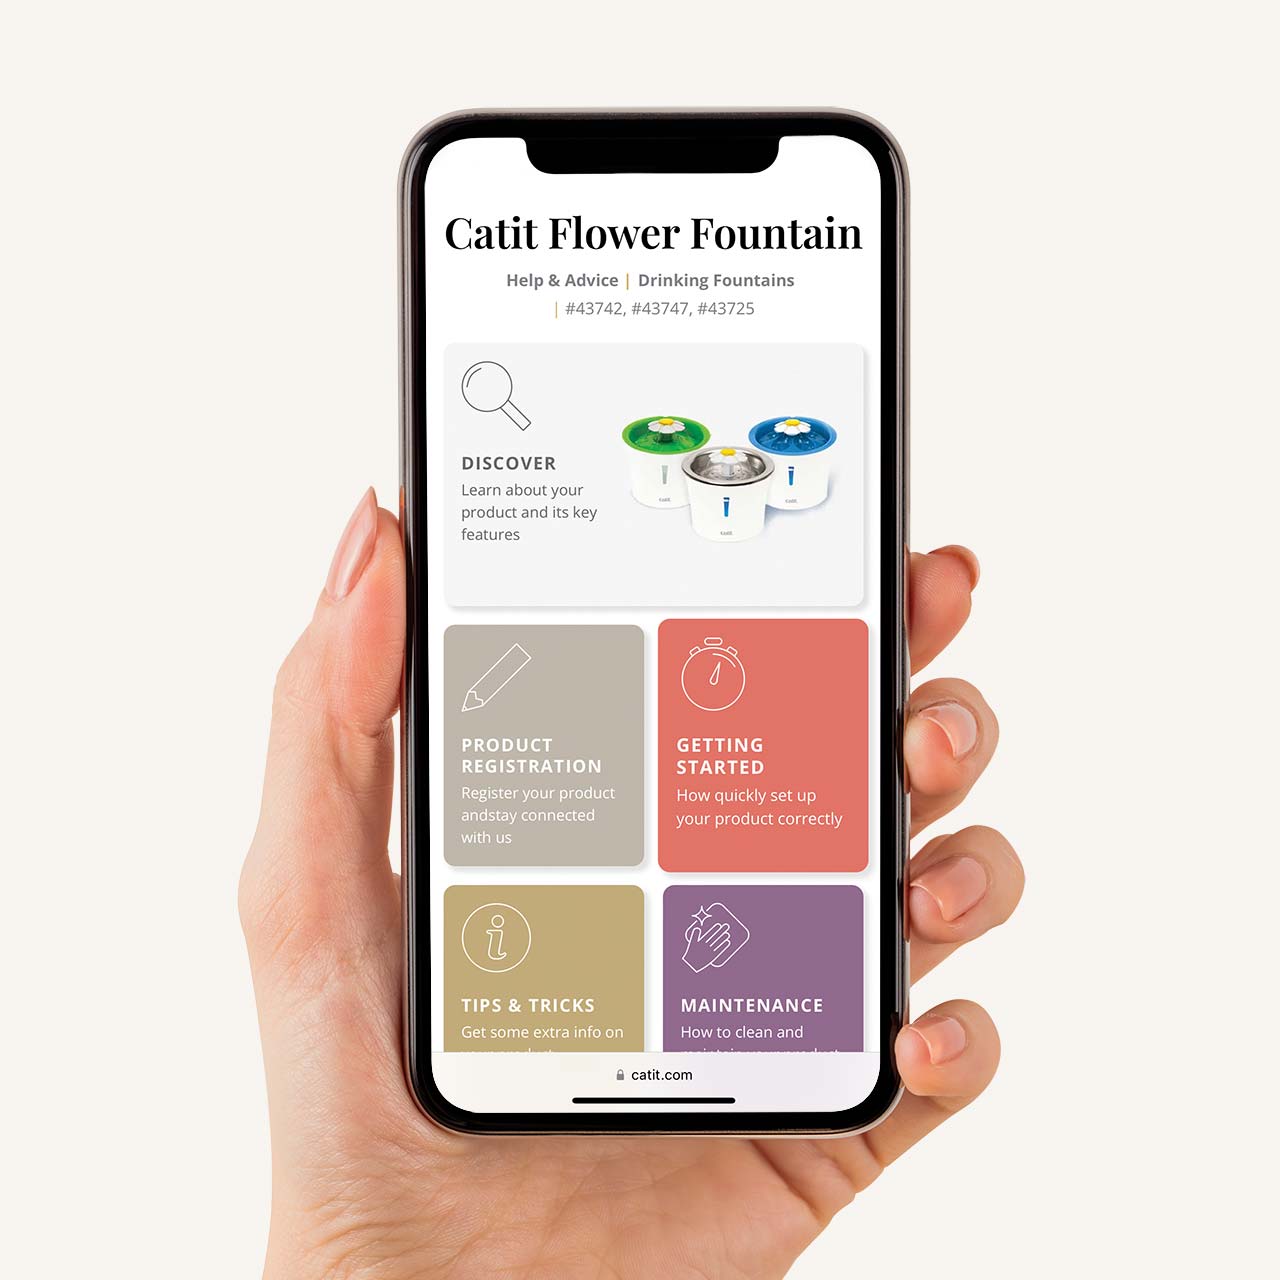 Hulp en advies over de Catit Flower Fountain